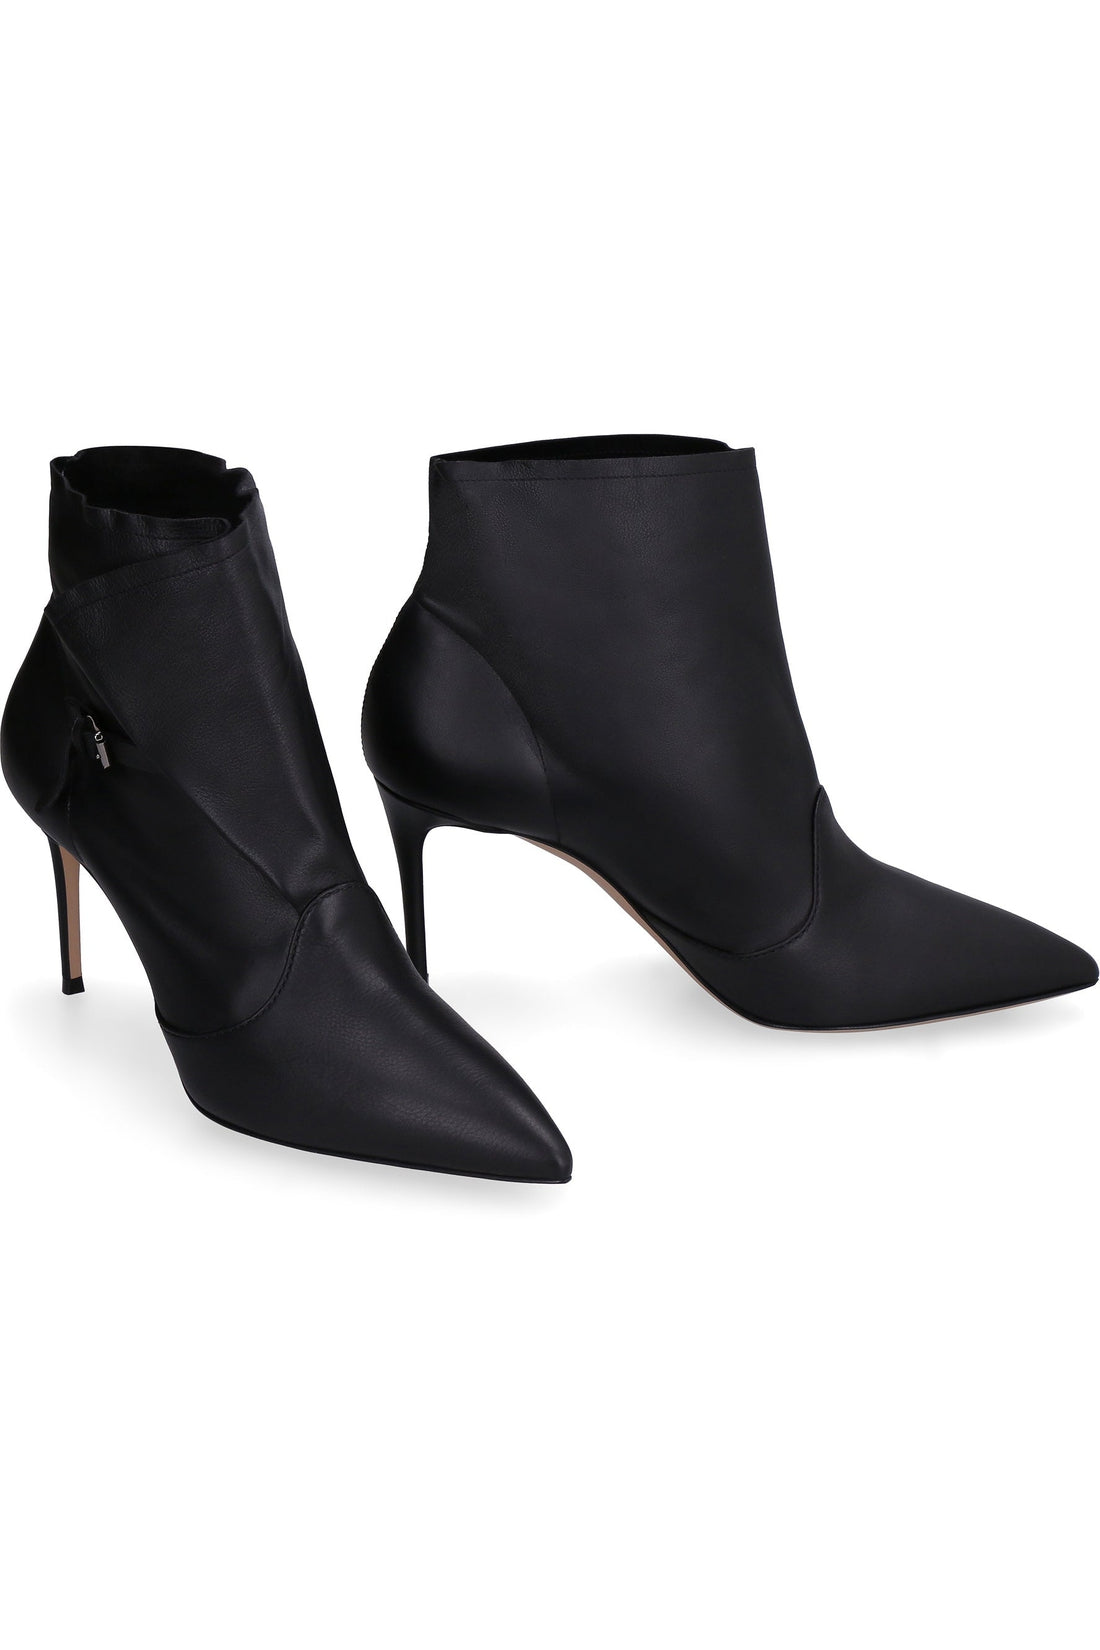 Casadei-OUTLET-SALE-Leather ankle boots-ARCHIVIST